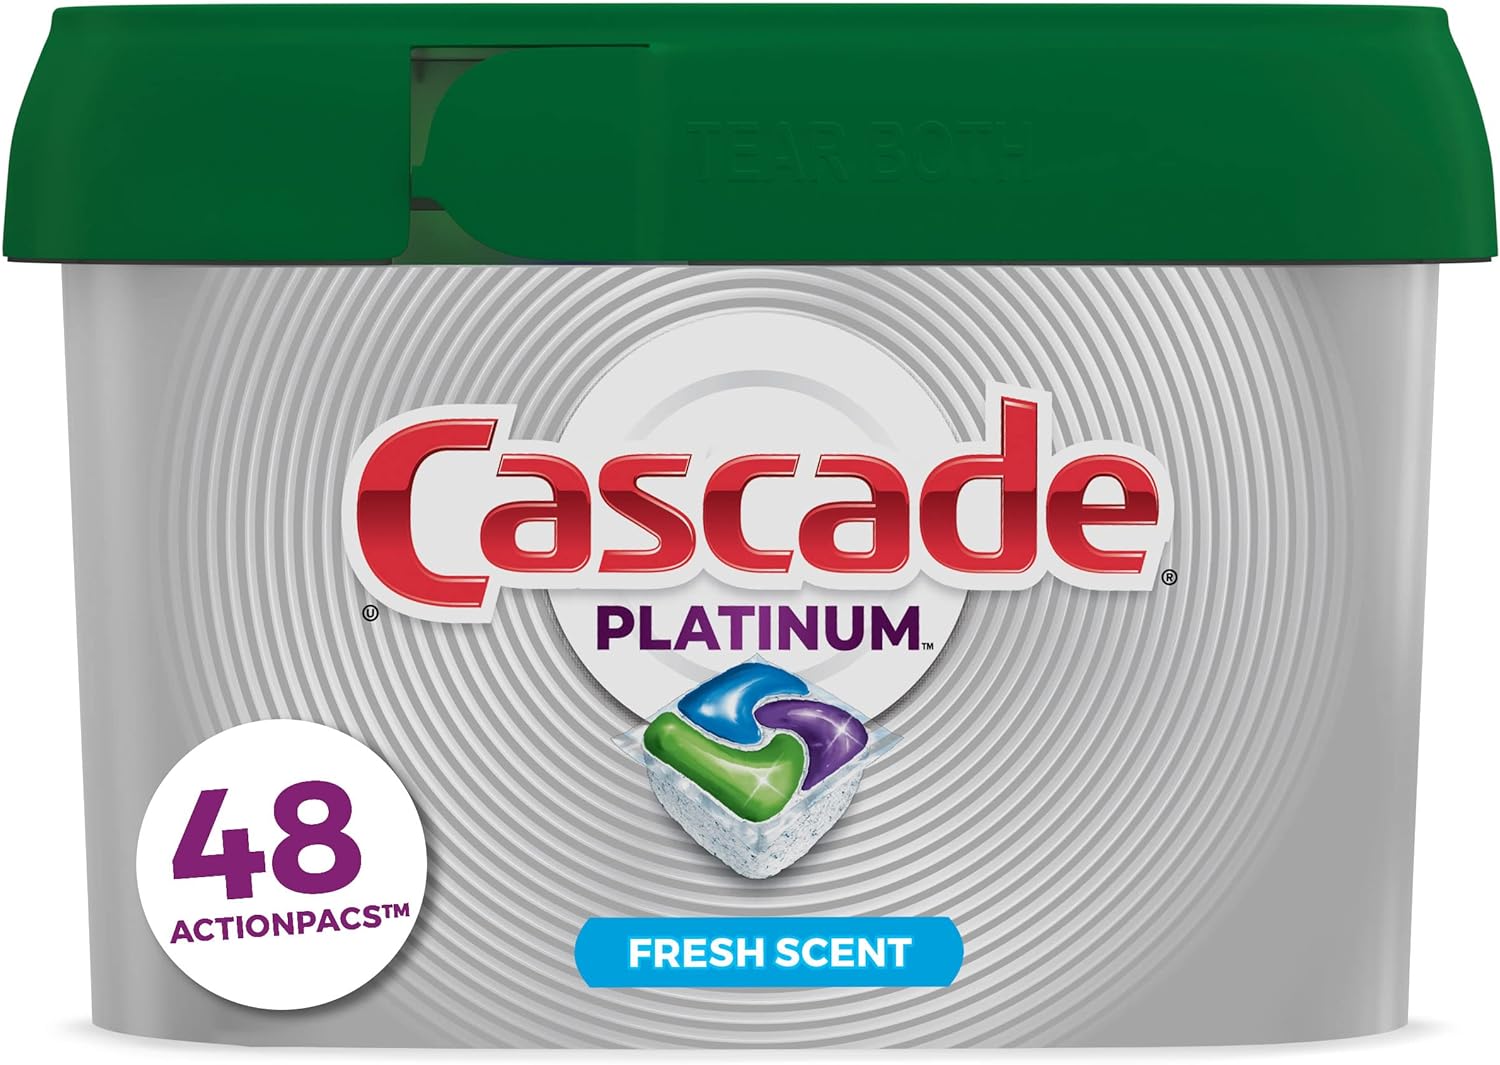 Cascade Platinum ActionPacs Dishwasher Detergent Pods, Fresh, 48 Count